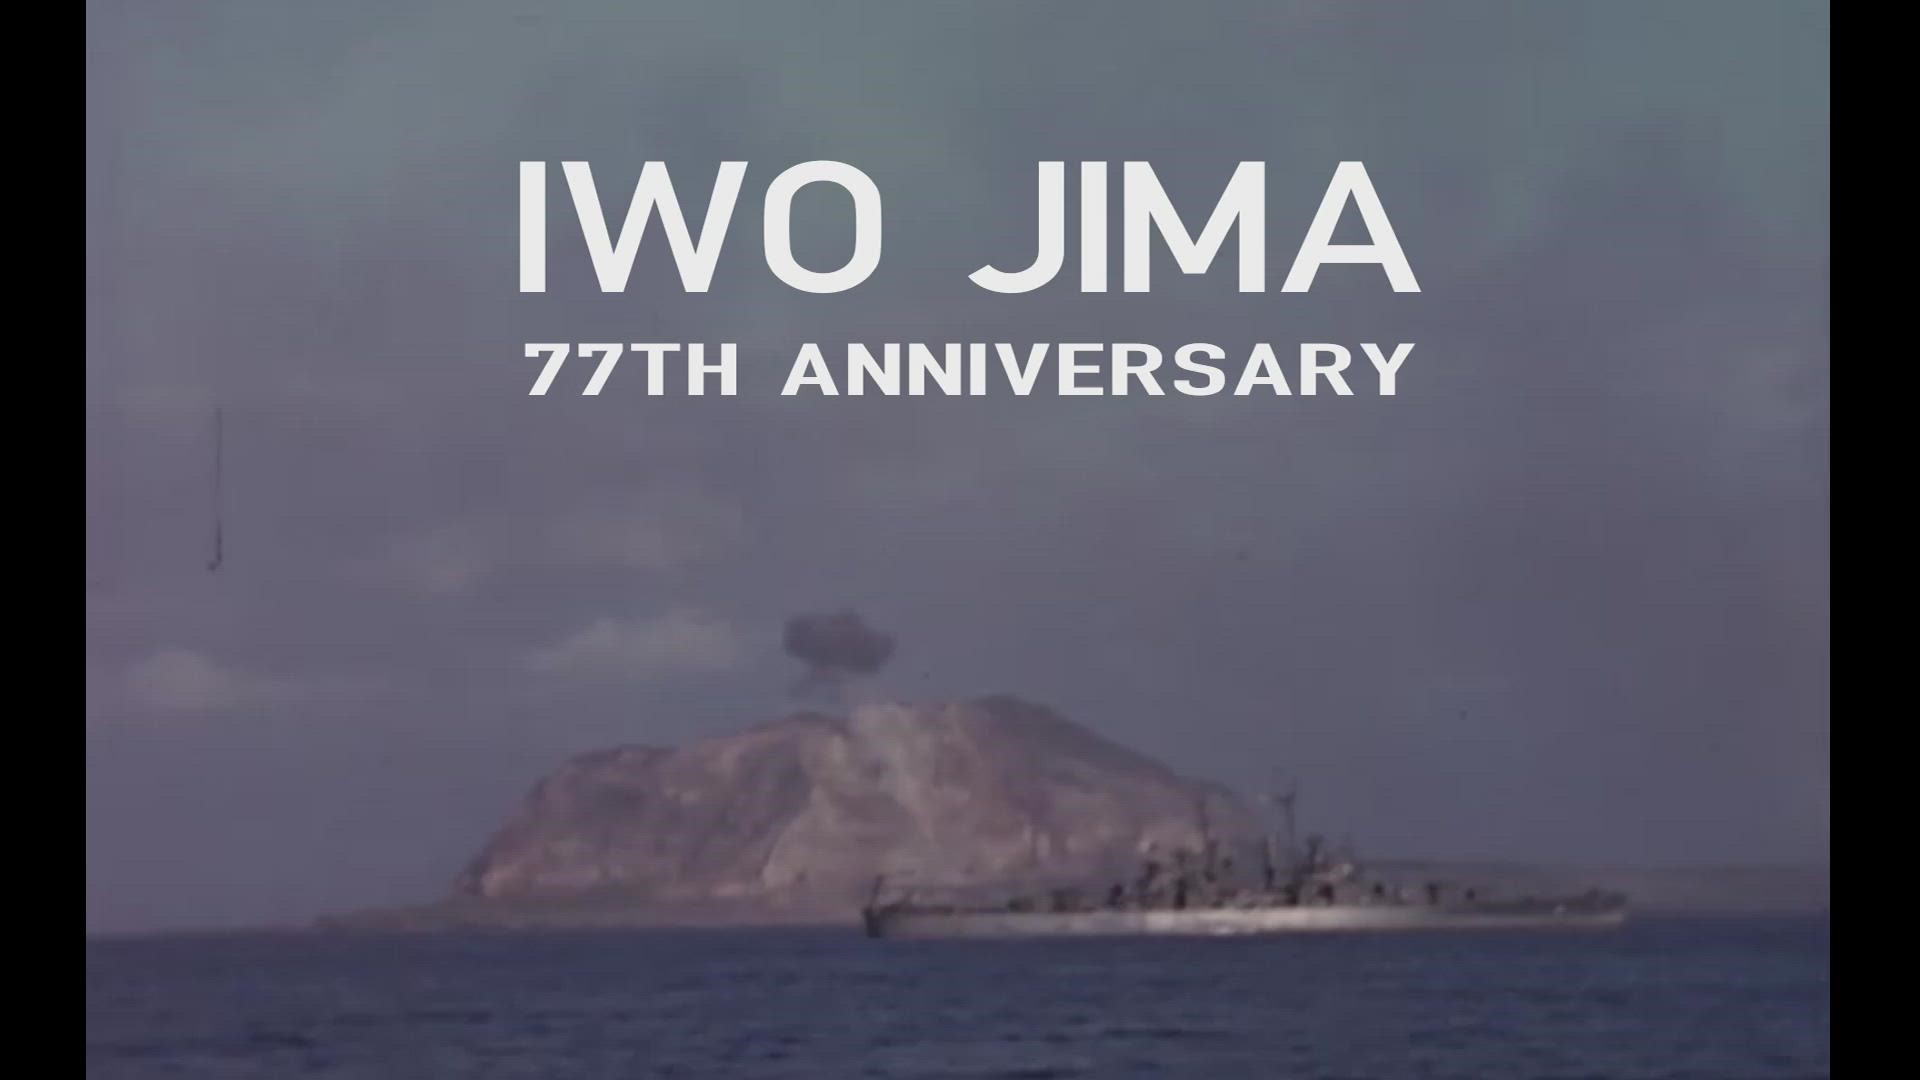 U.S. Marines and sailors received the command to overtake Iwo Jima on Feb. 19, 1945.